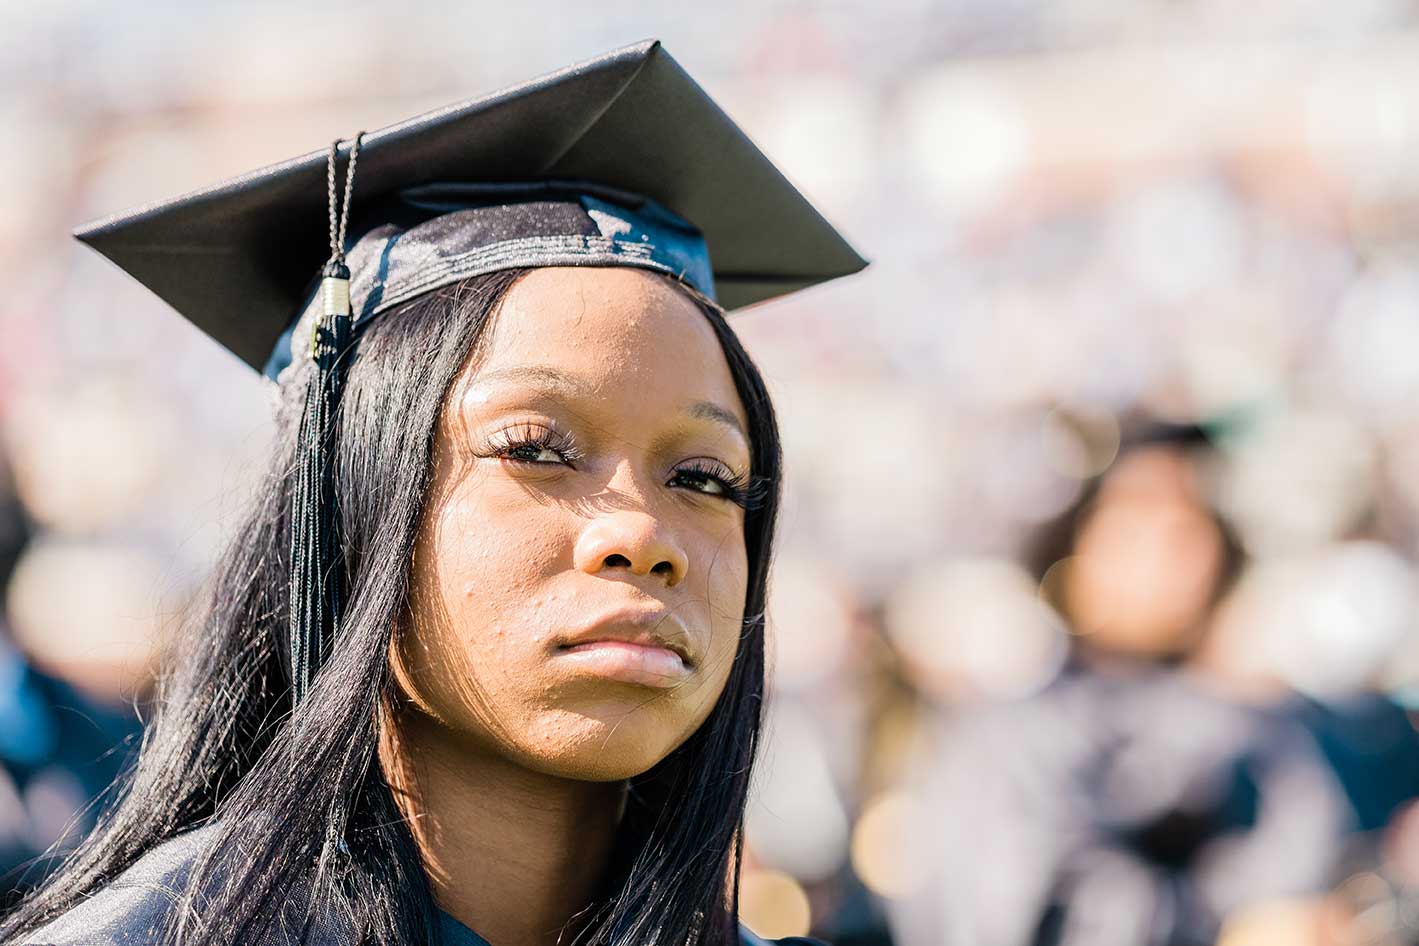 Woman in graduation cap looking ahead